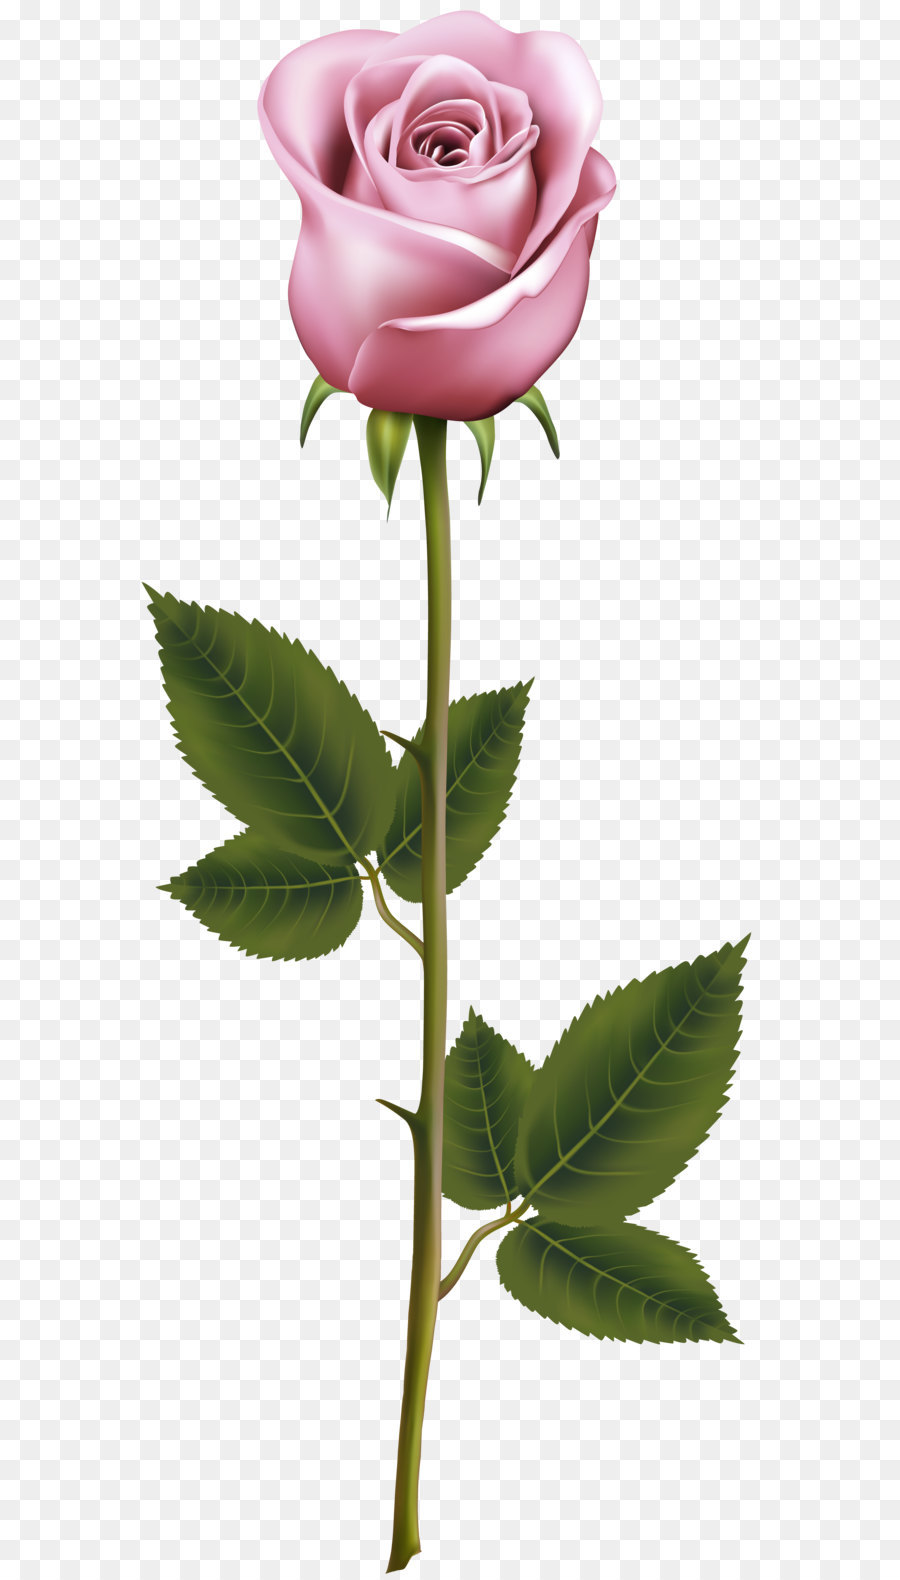 Blue Rose Clip Art - Rosa Rose mit Stiel PNG Transparent, Clip Art Bild